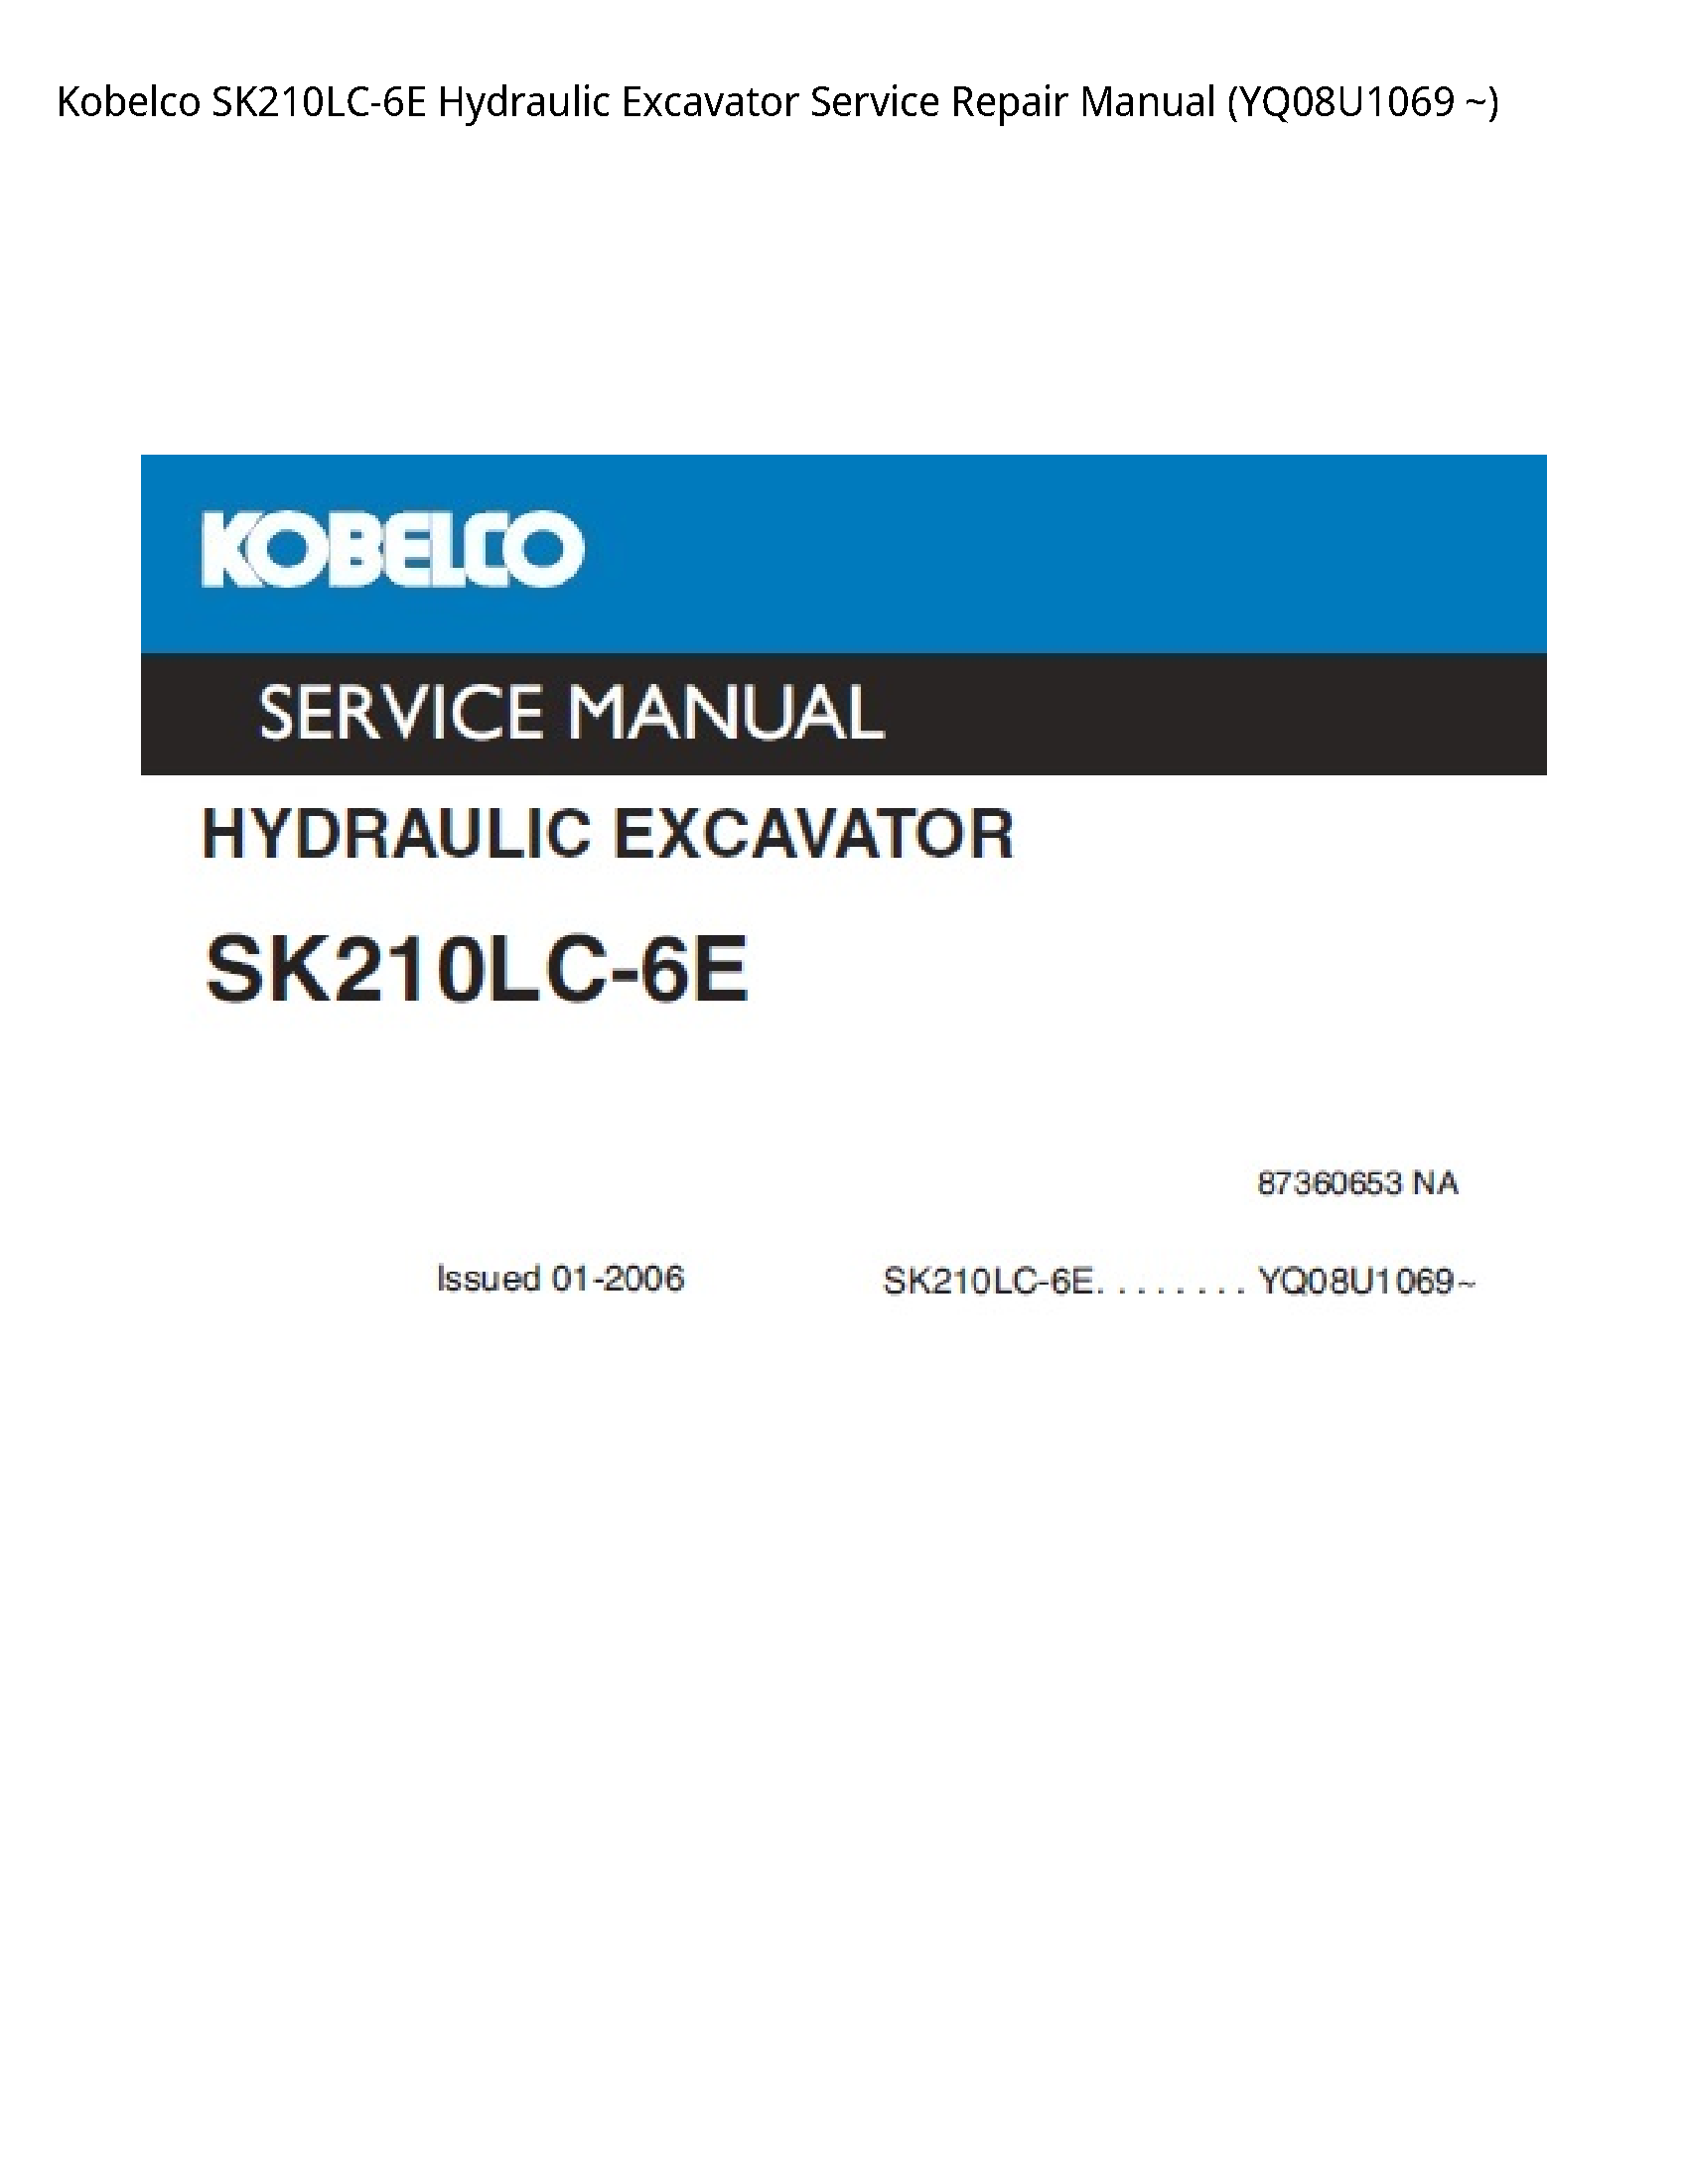 Kobelco SK210LC-6E Hydraulic Excavator manual